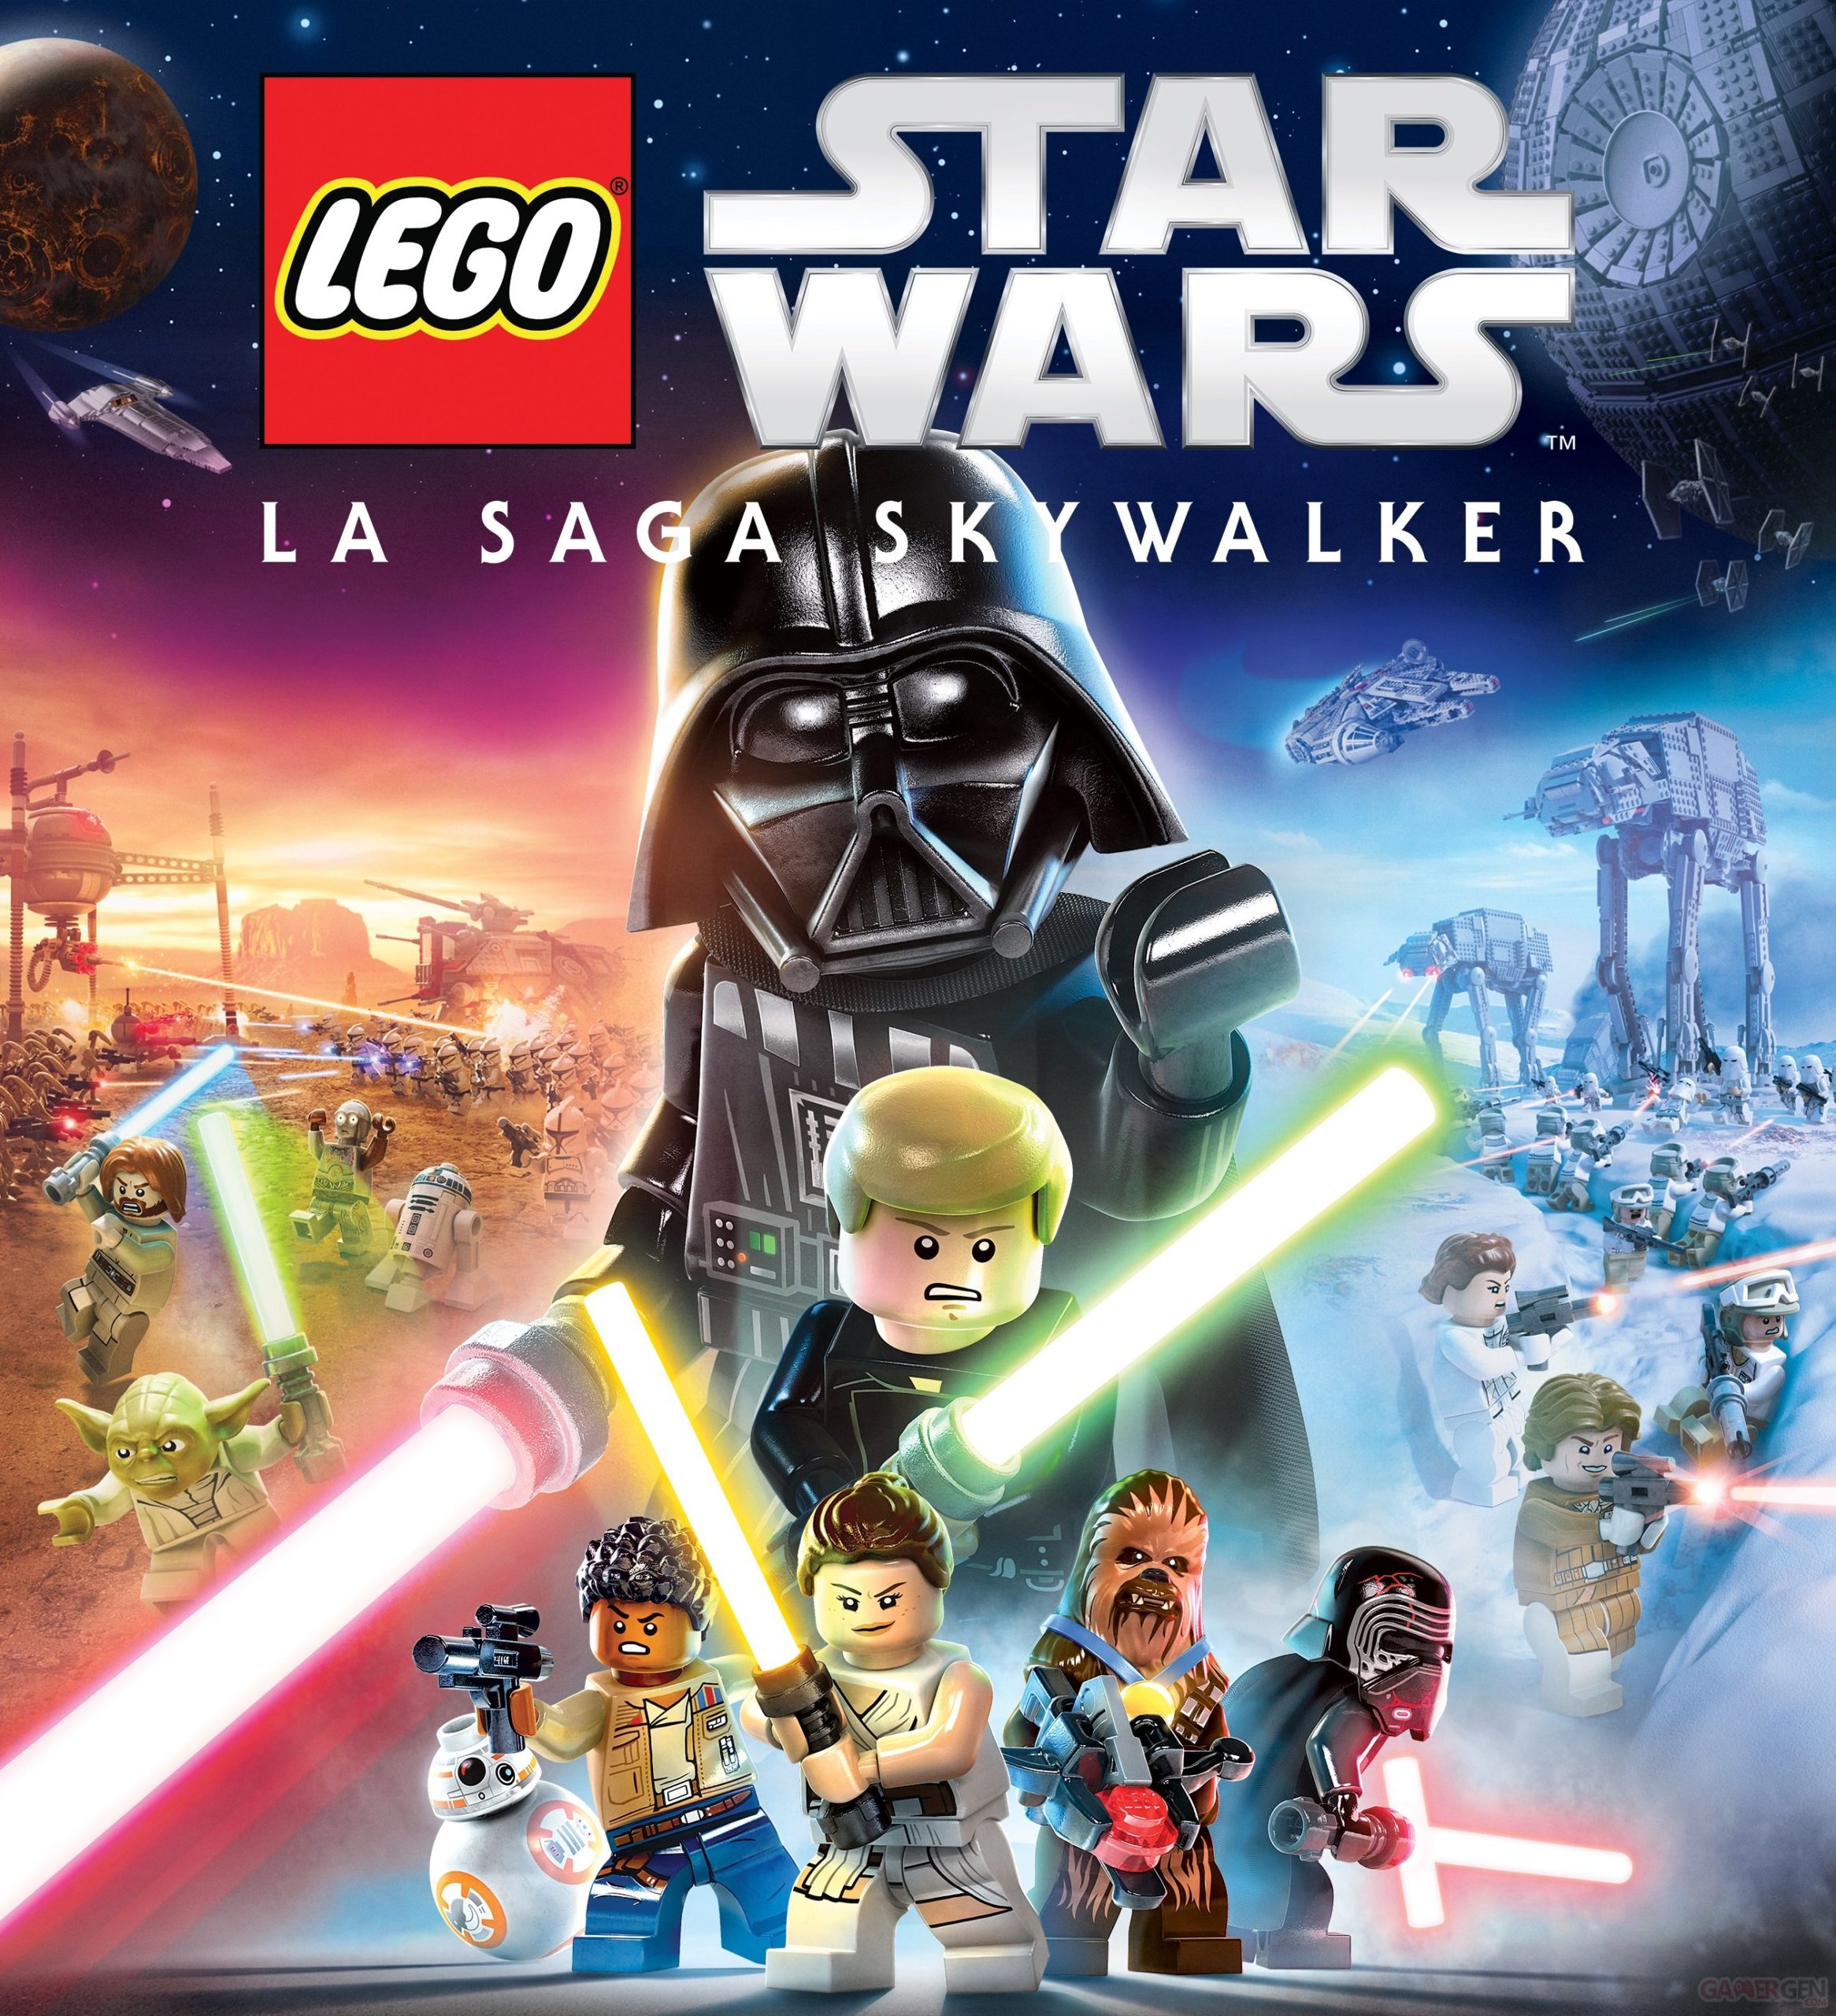 Le jeu vidéo LEGO Star Wars : La Saga Skywalker sortira le 5 avril